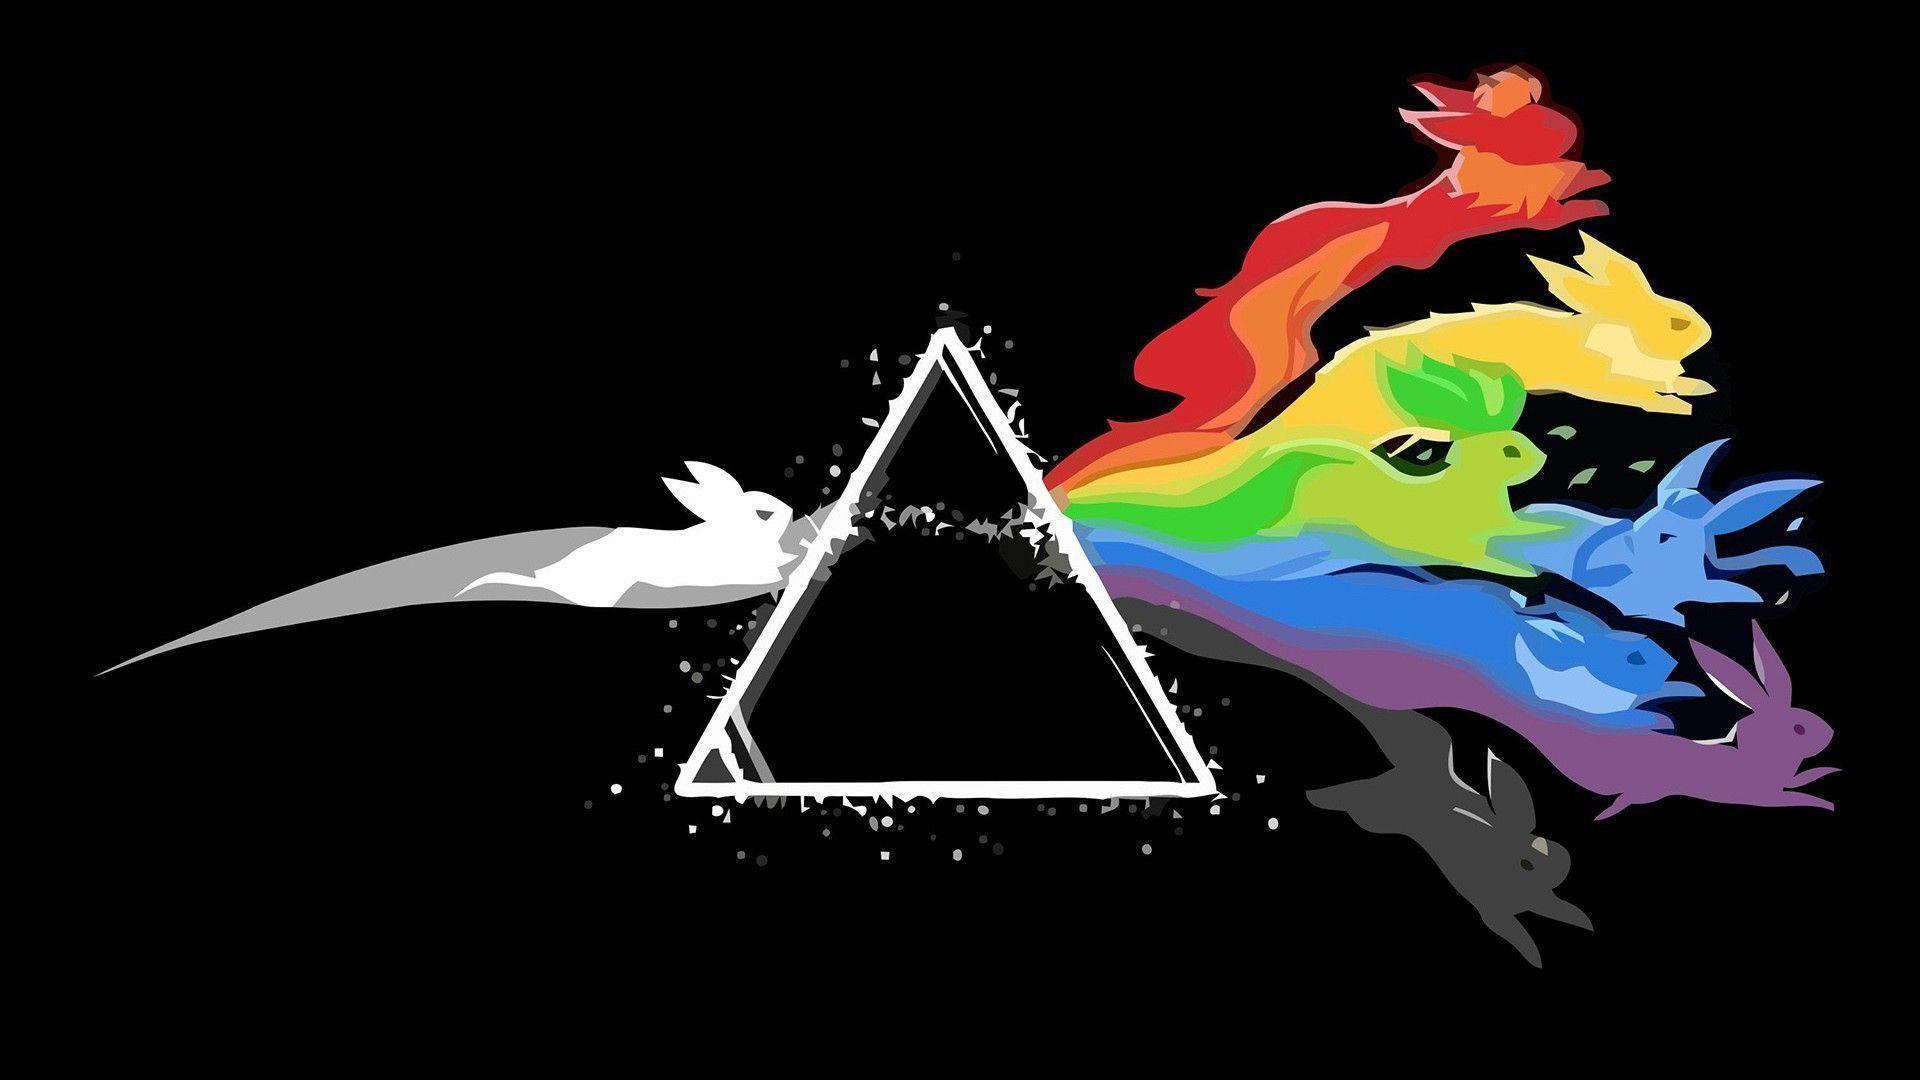 Pink Floyd, pokemon, dispersion wallpaper and image